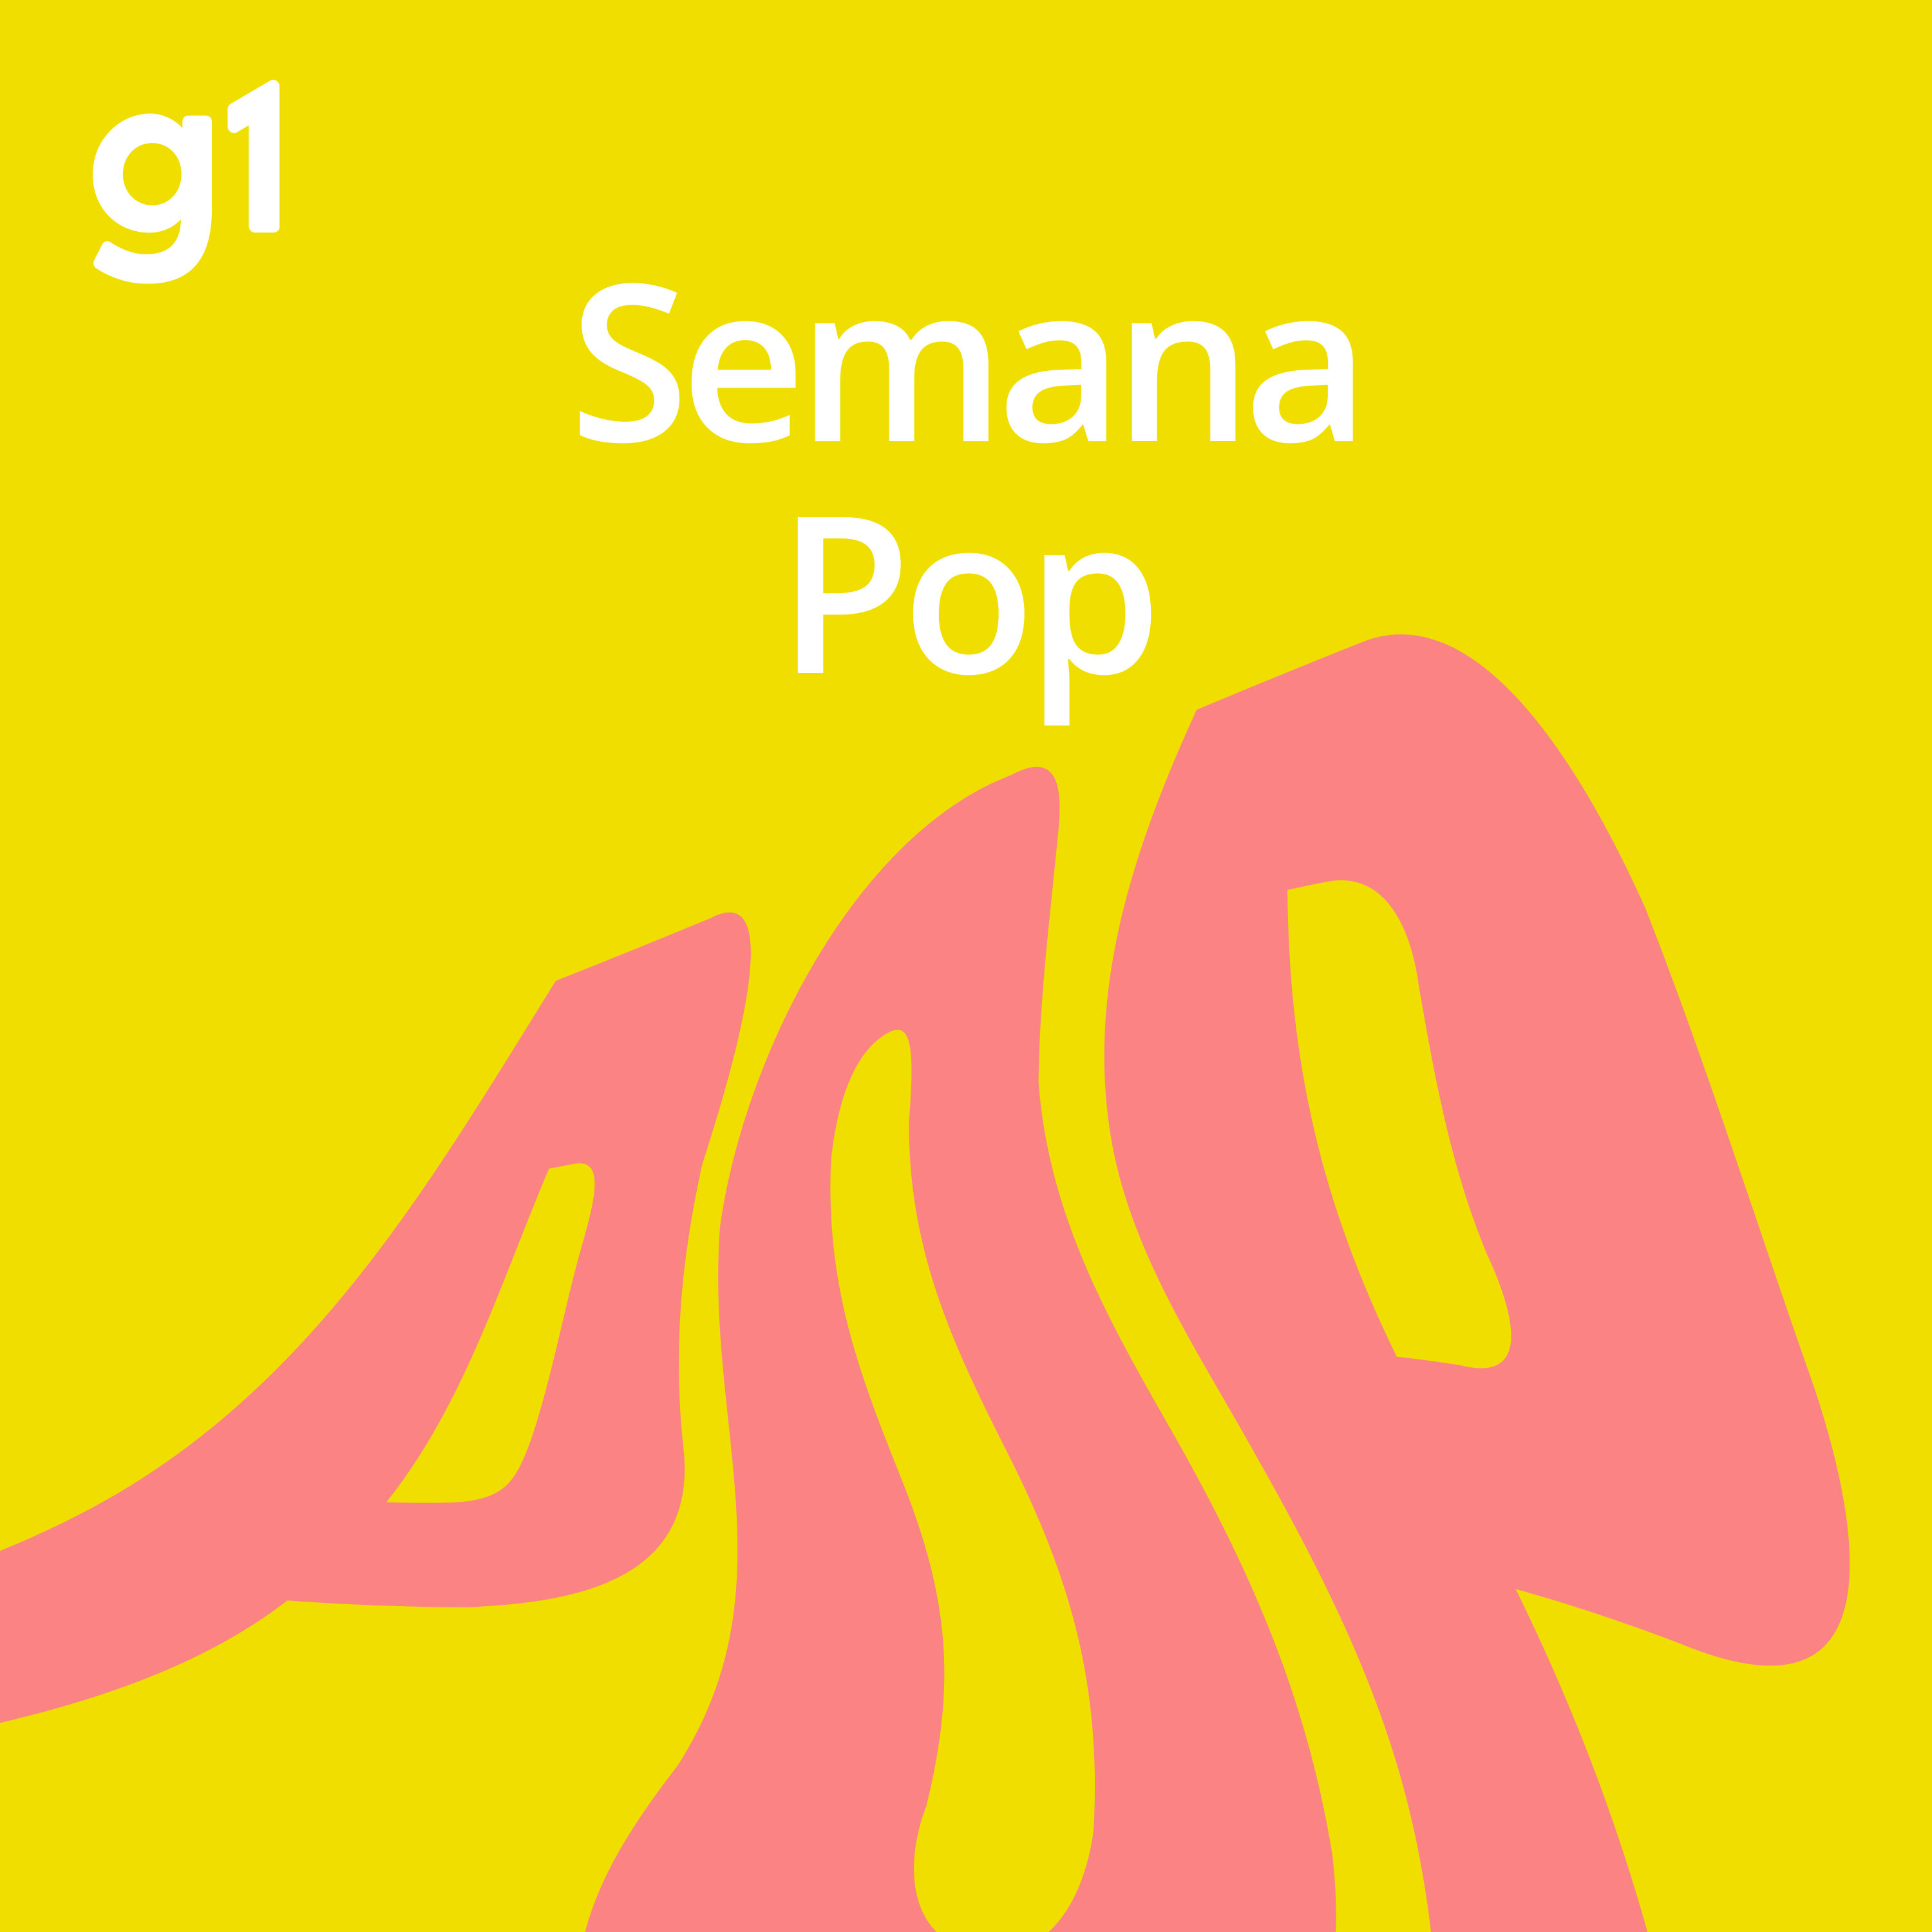 G1 - Semana Pop